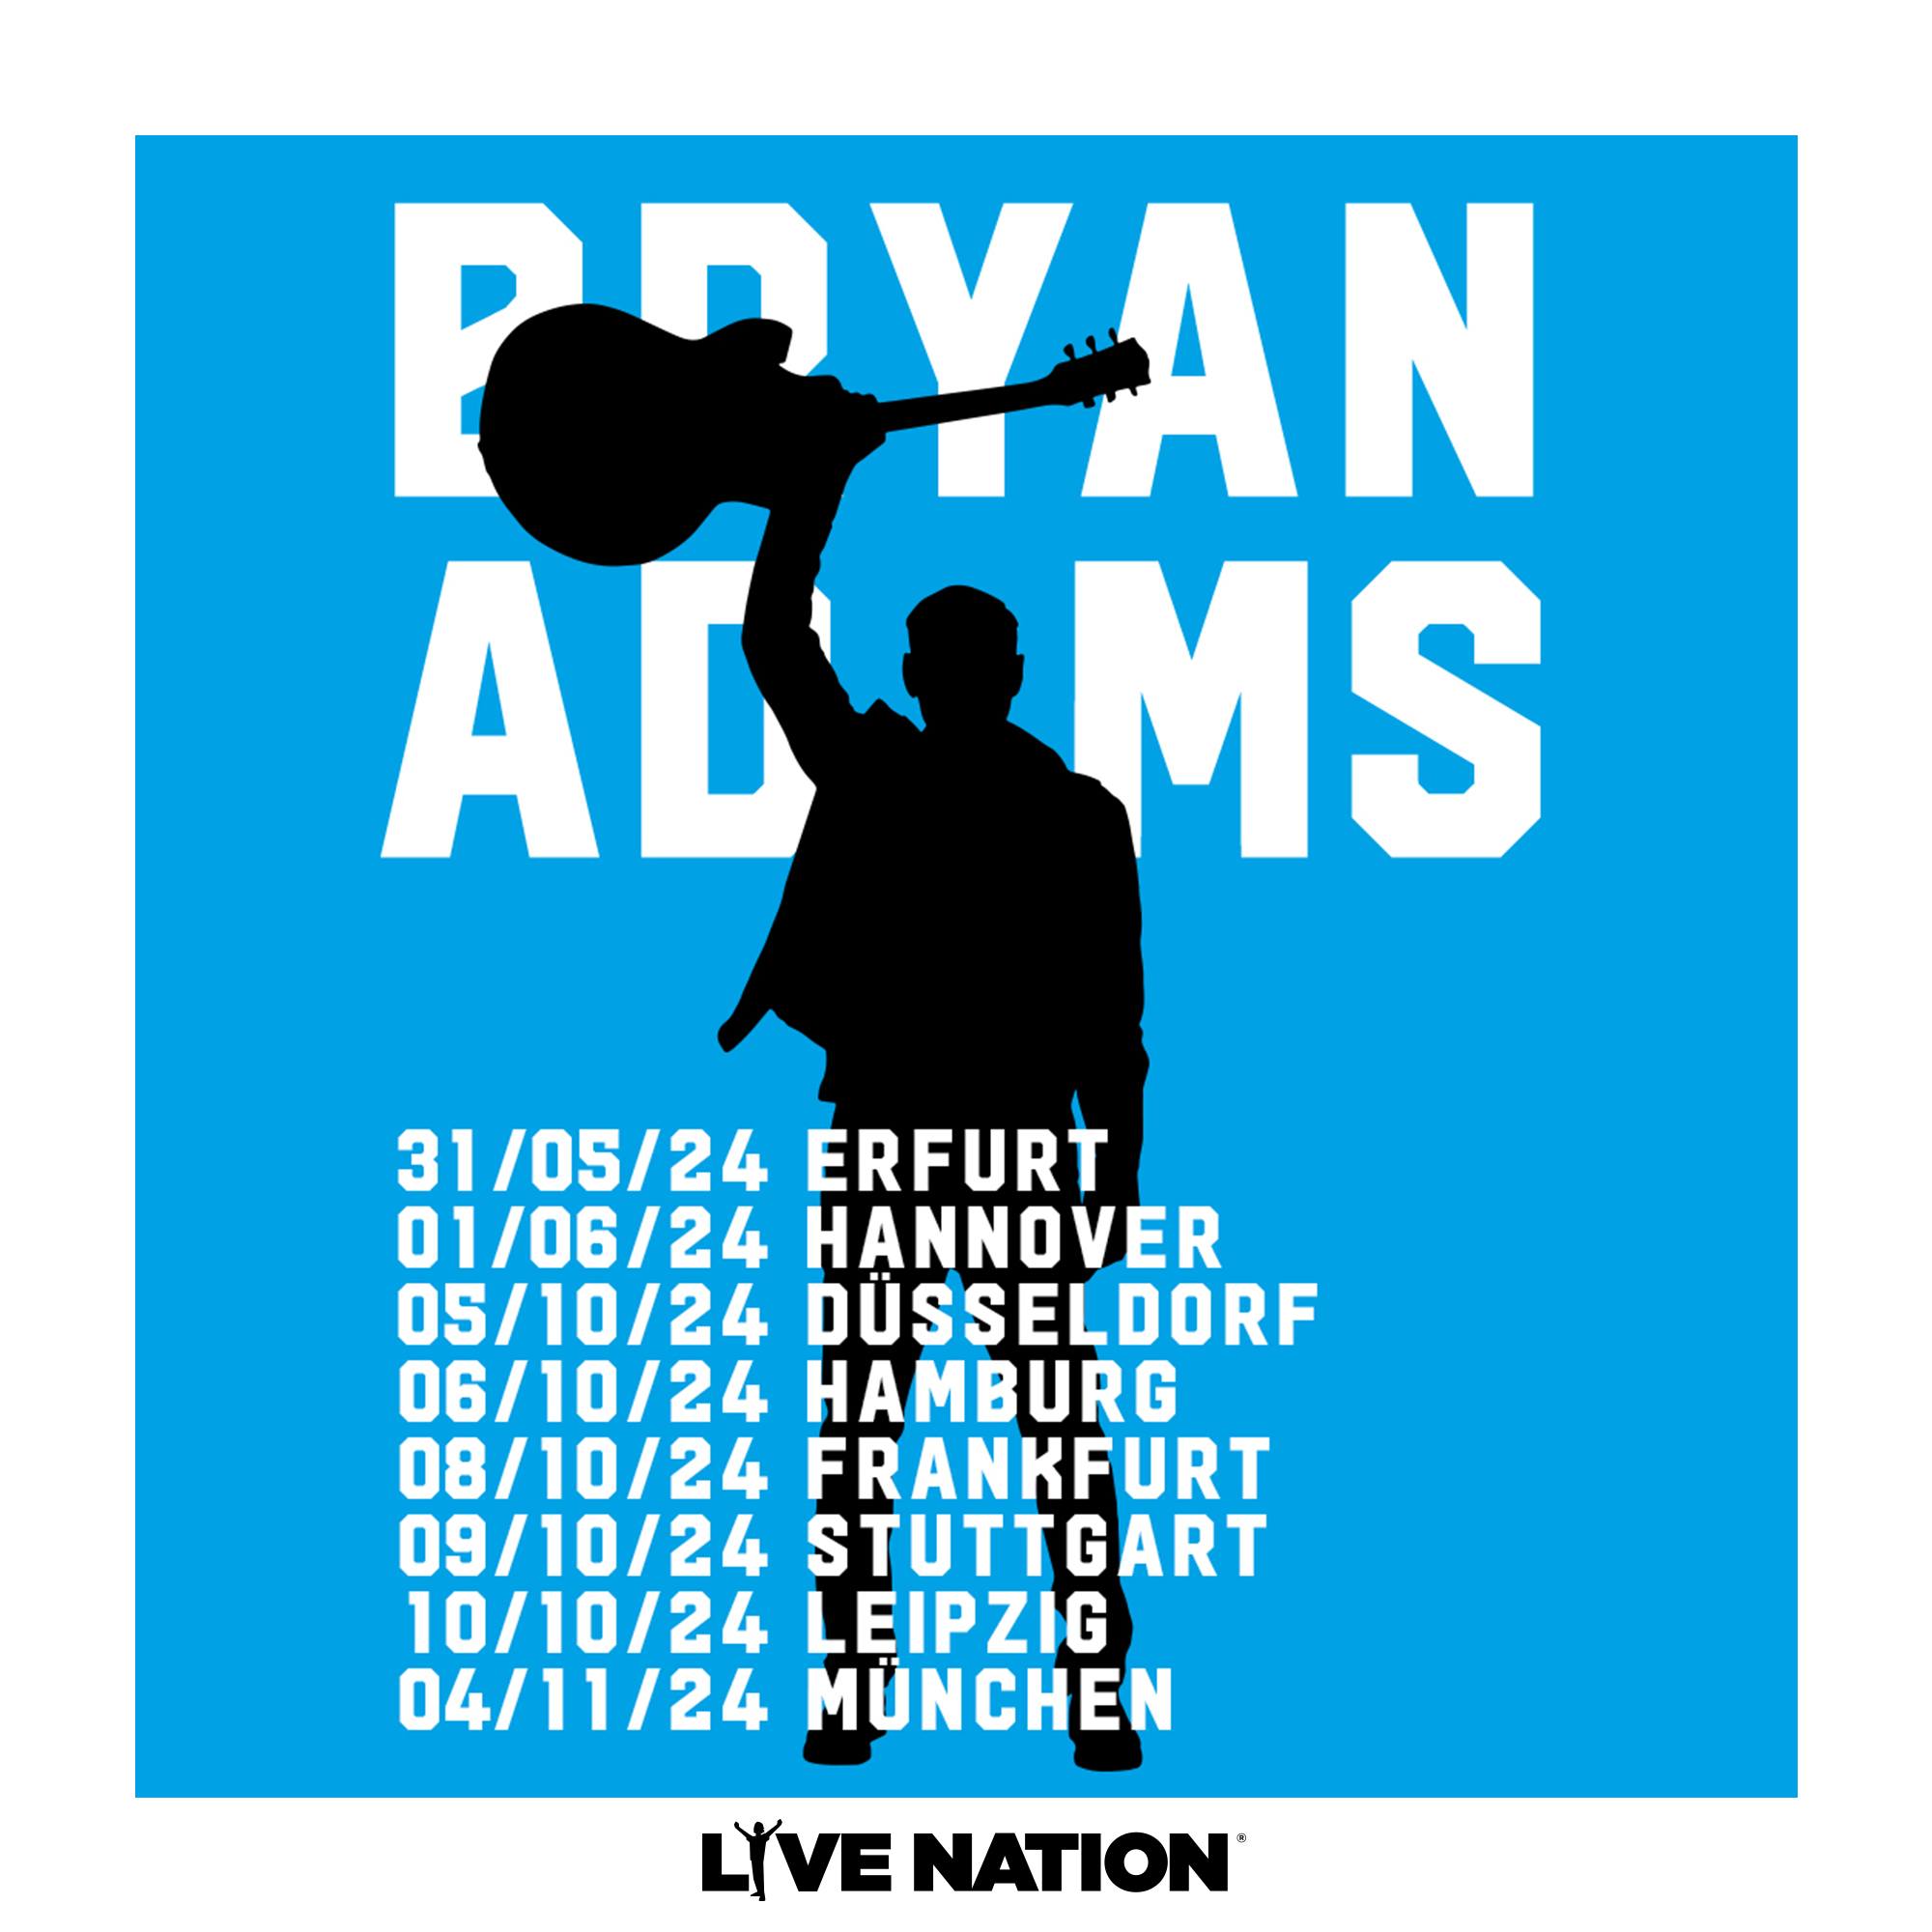 Billets Bryan Adams (Barclays Arena - Hambourg)